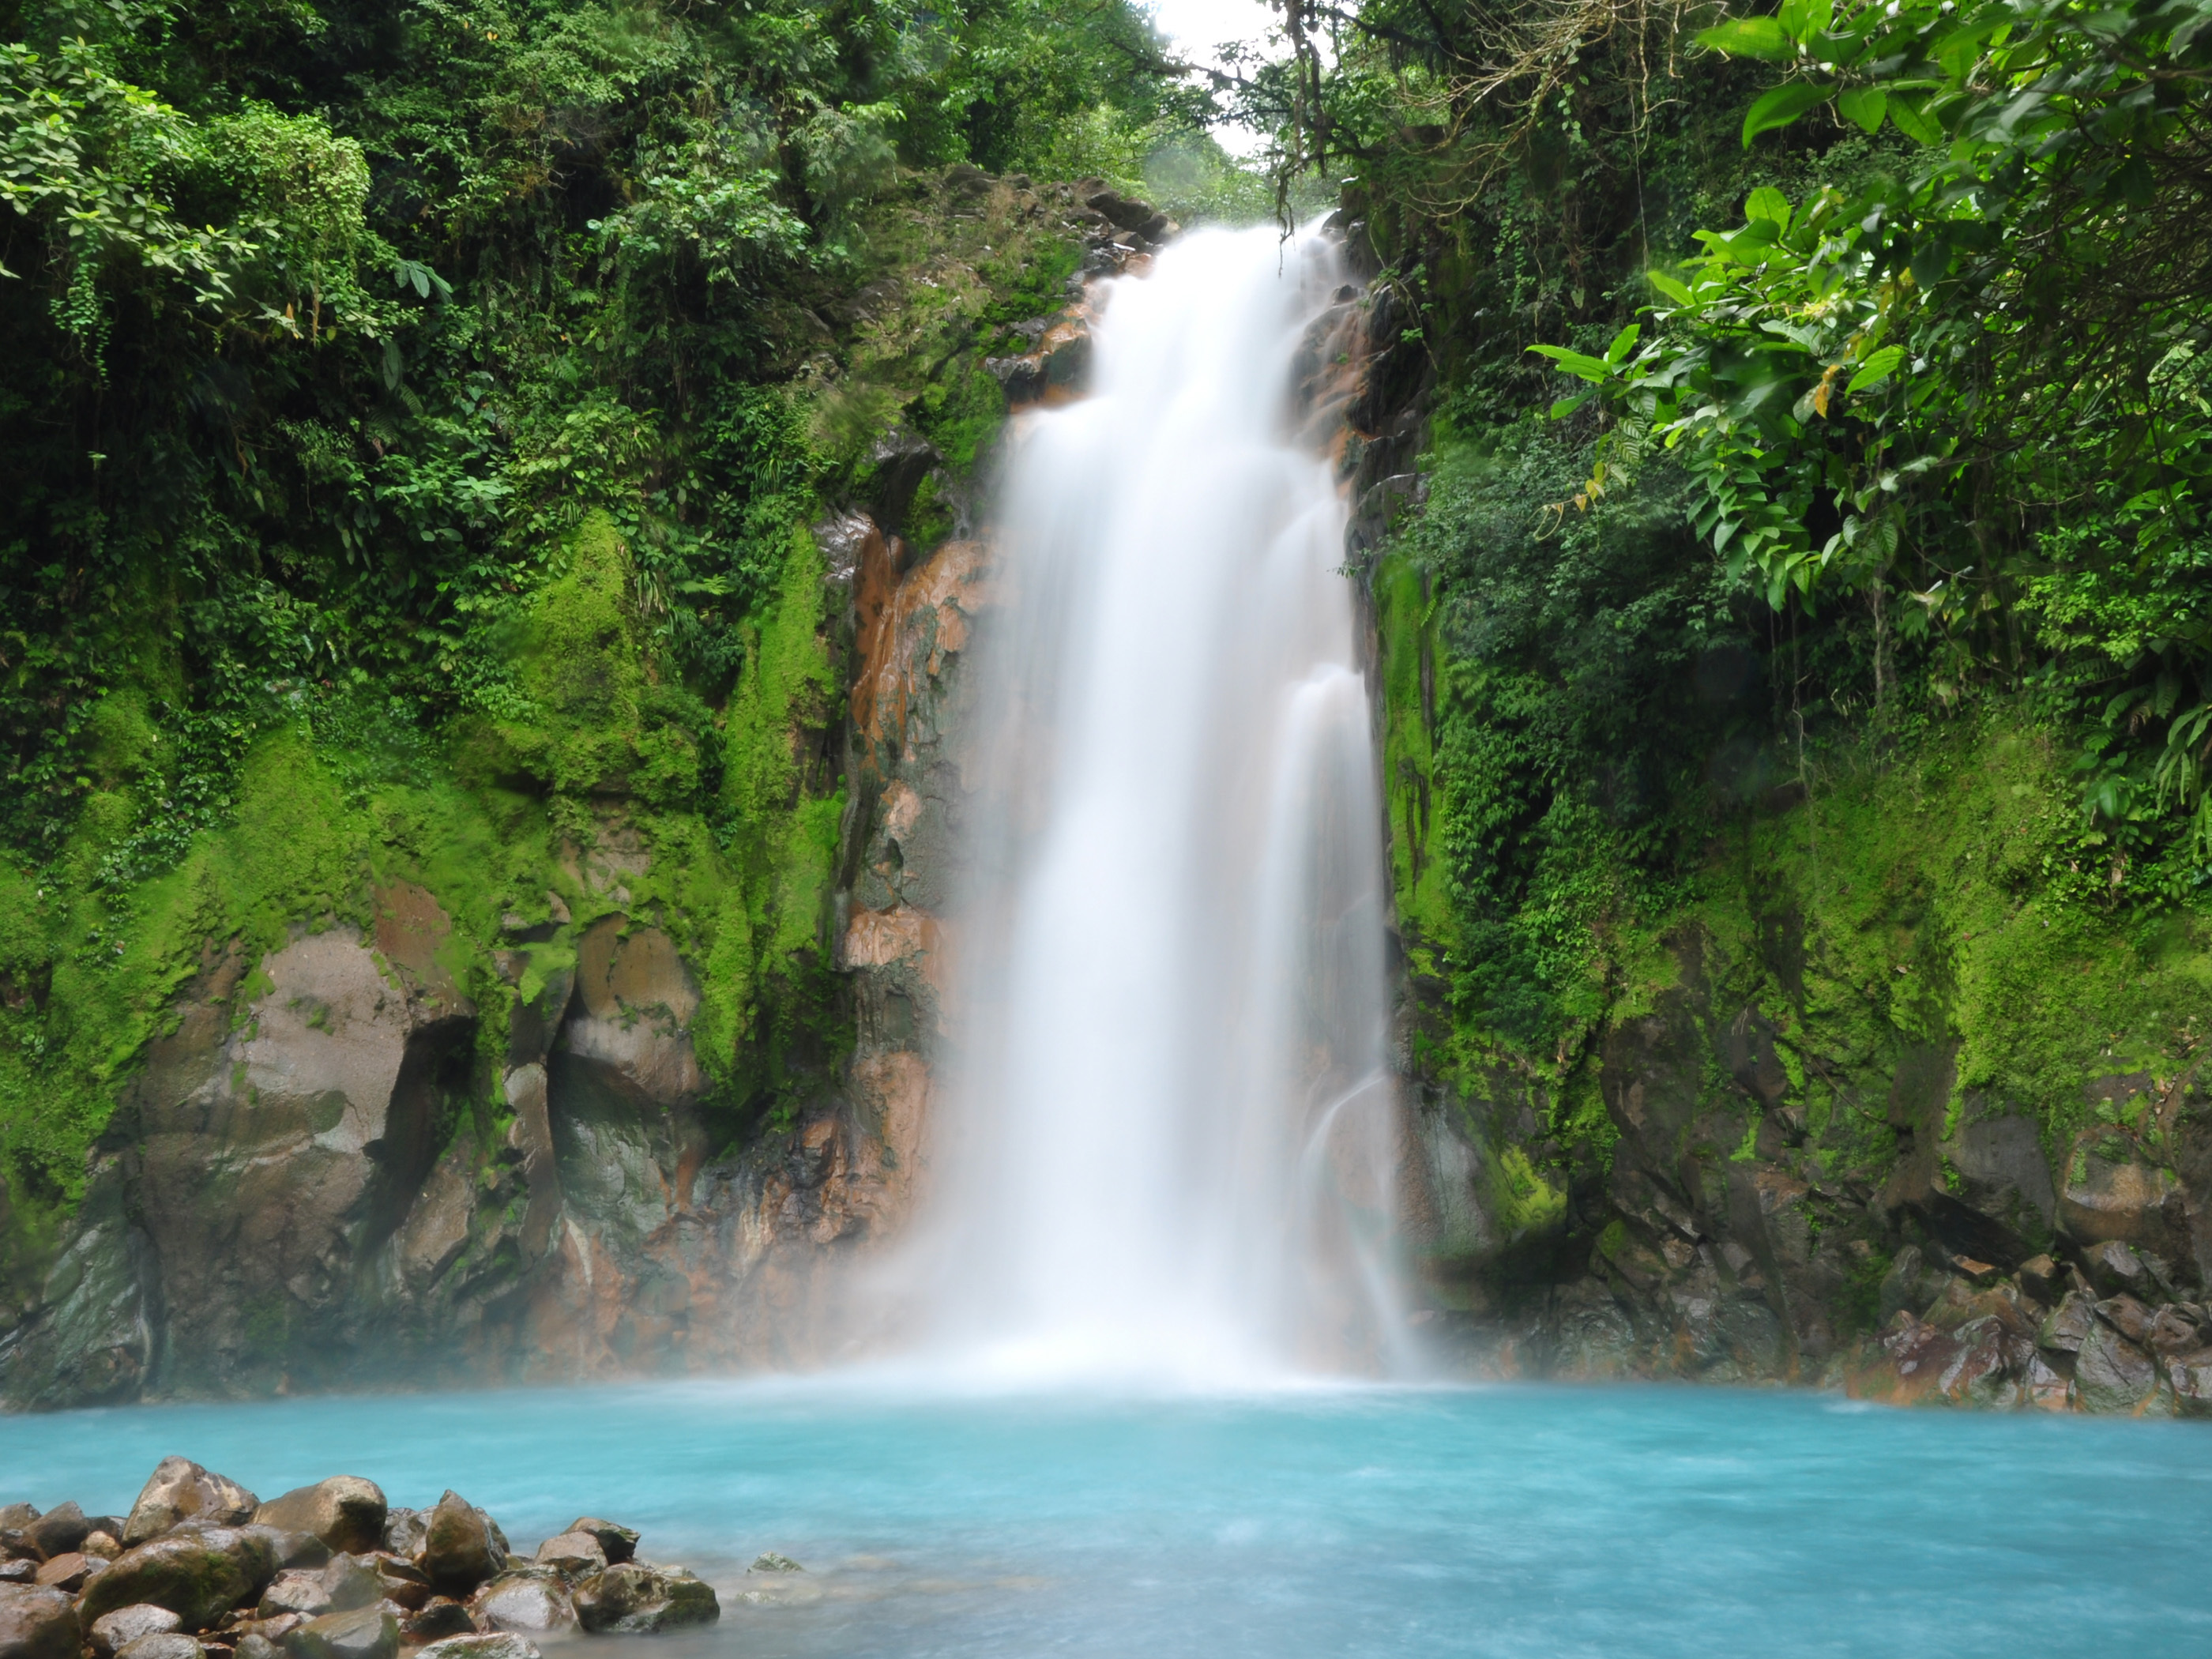 En costa. Водопад Рица. Коста-Рика. Голубой водопад. Красивые пейзажи с водопадами.